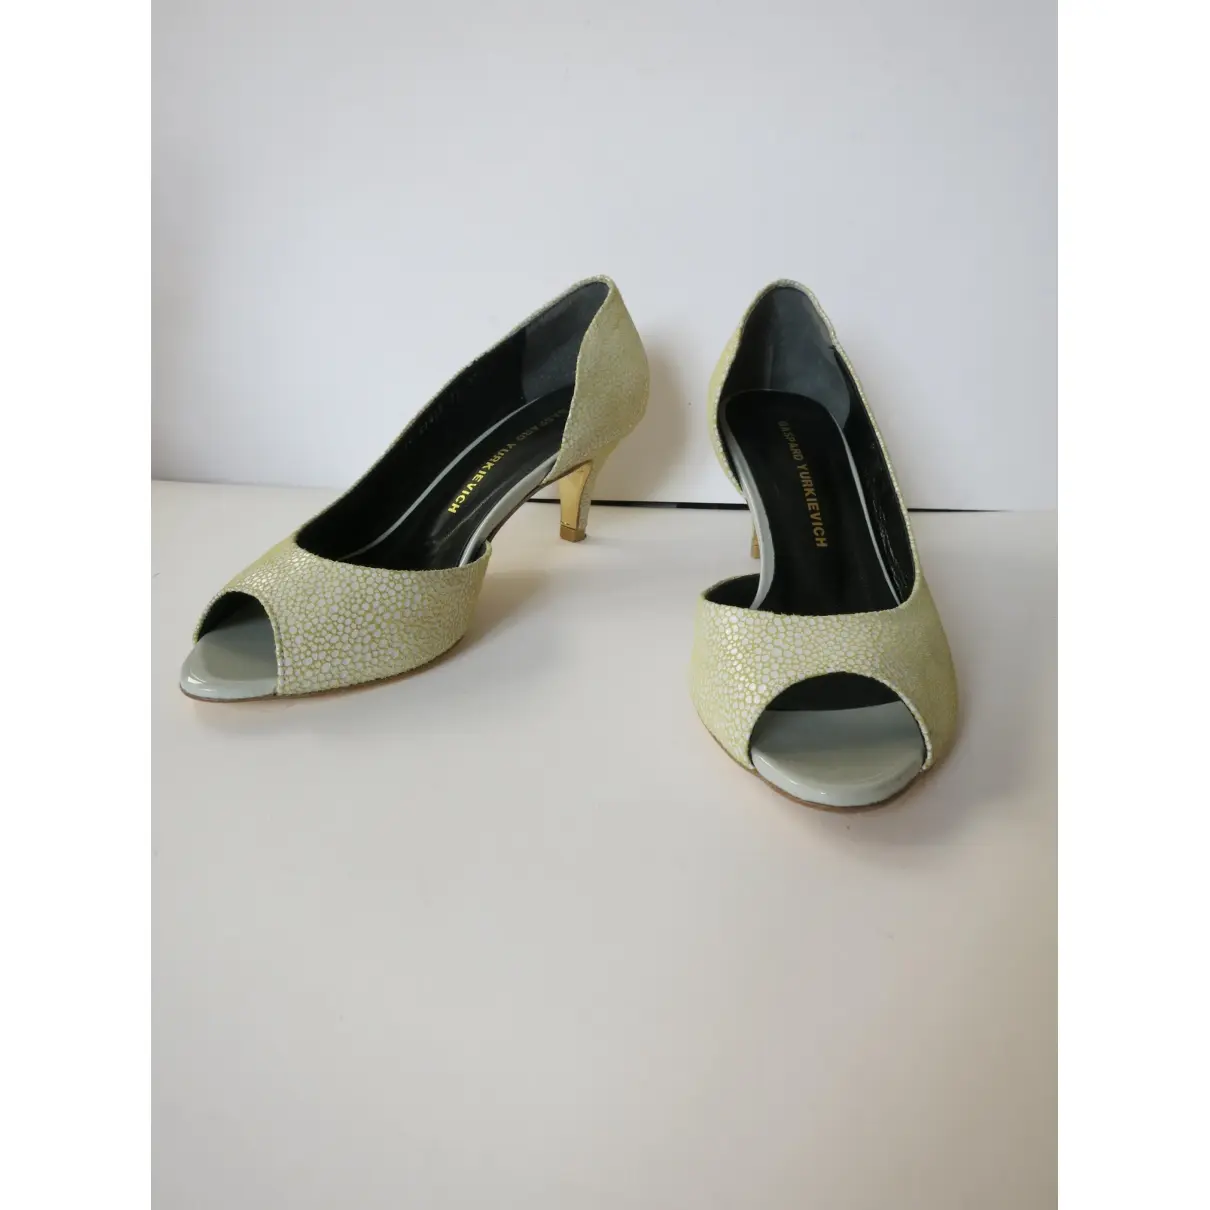 Gaspard Yurkievich Leather heels for sale